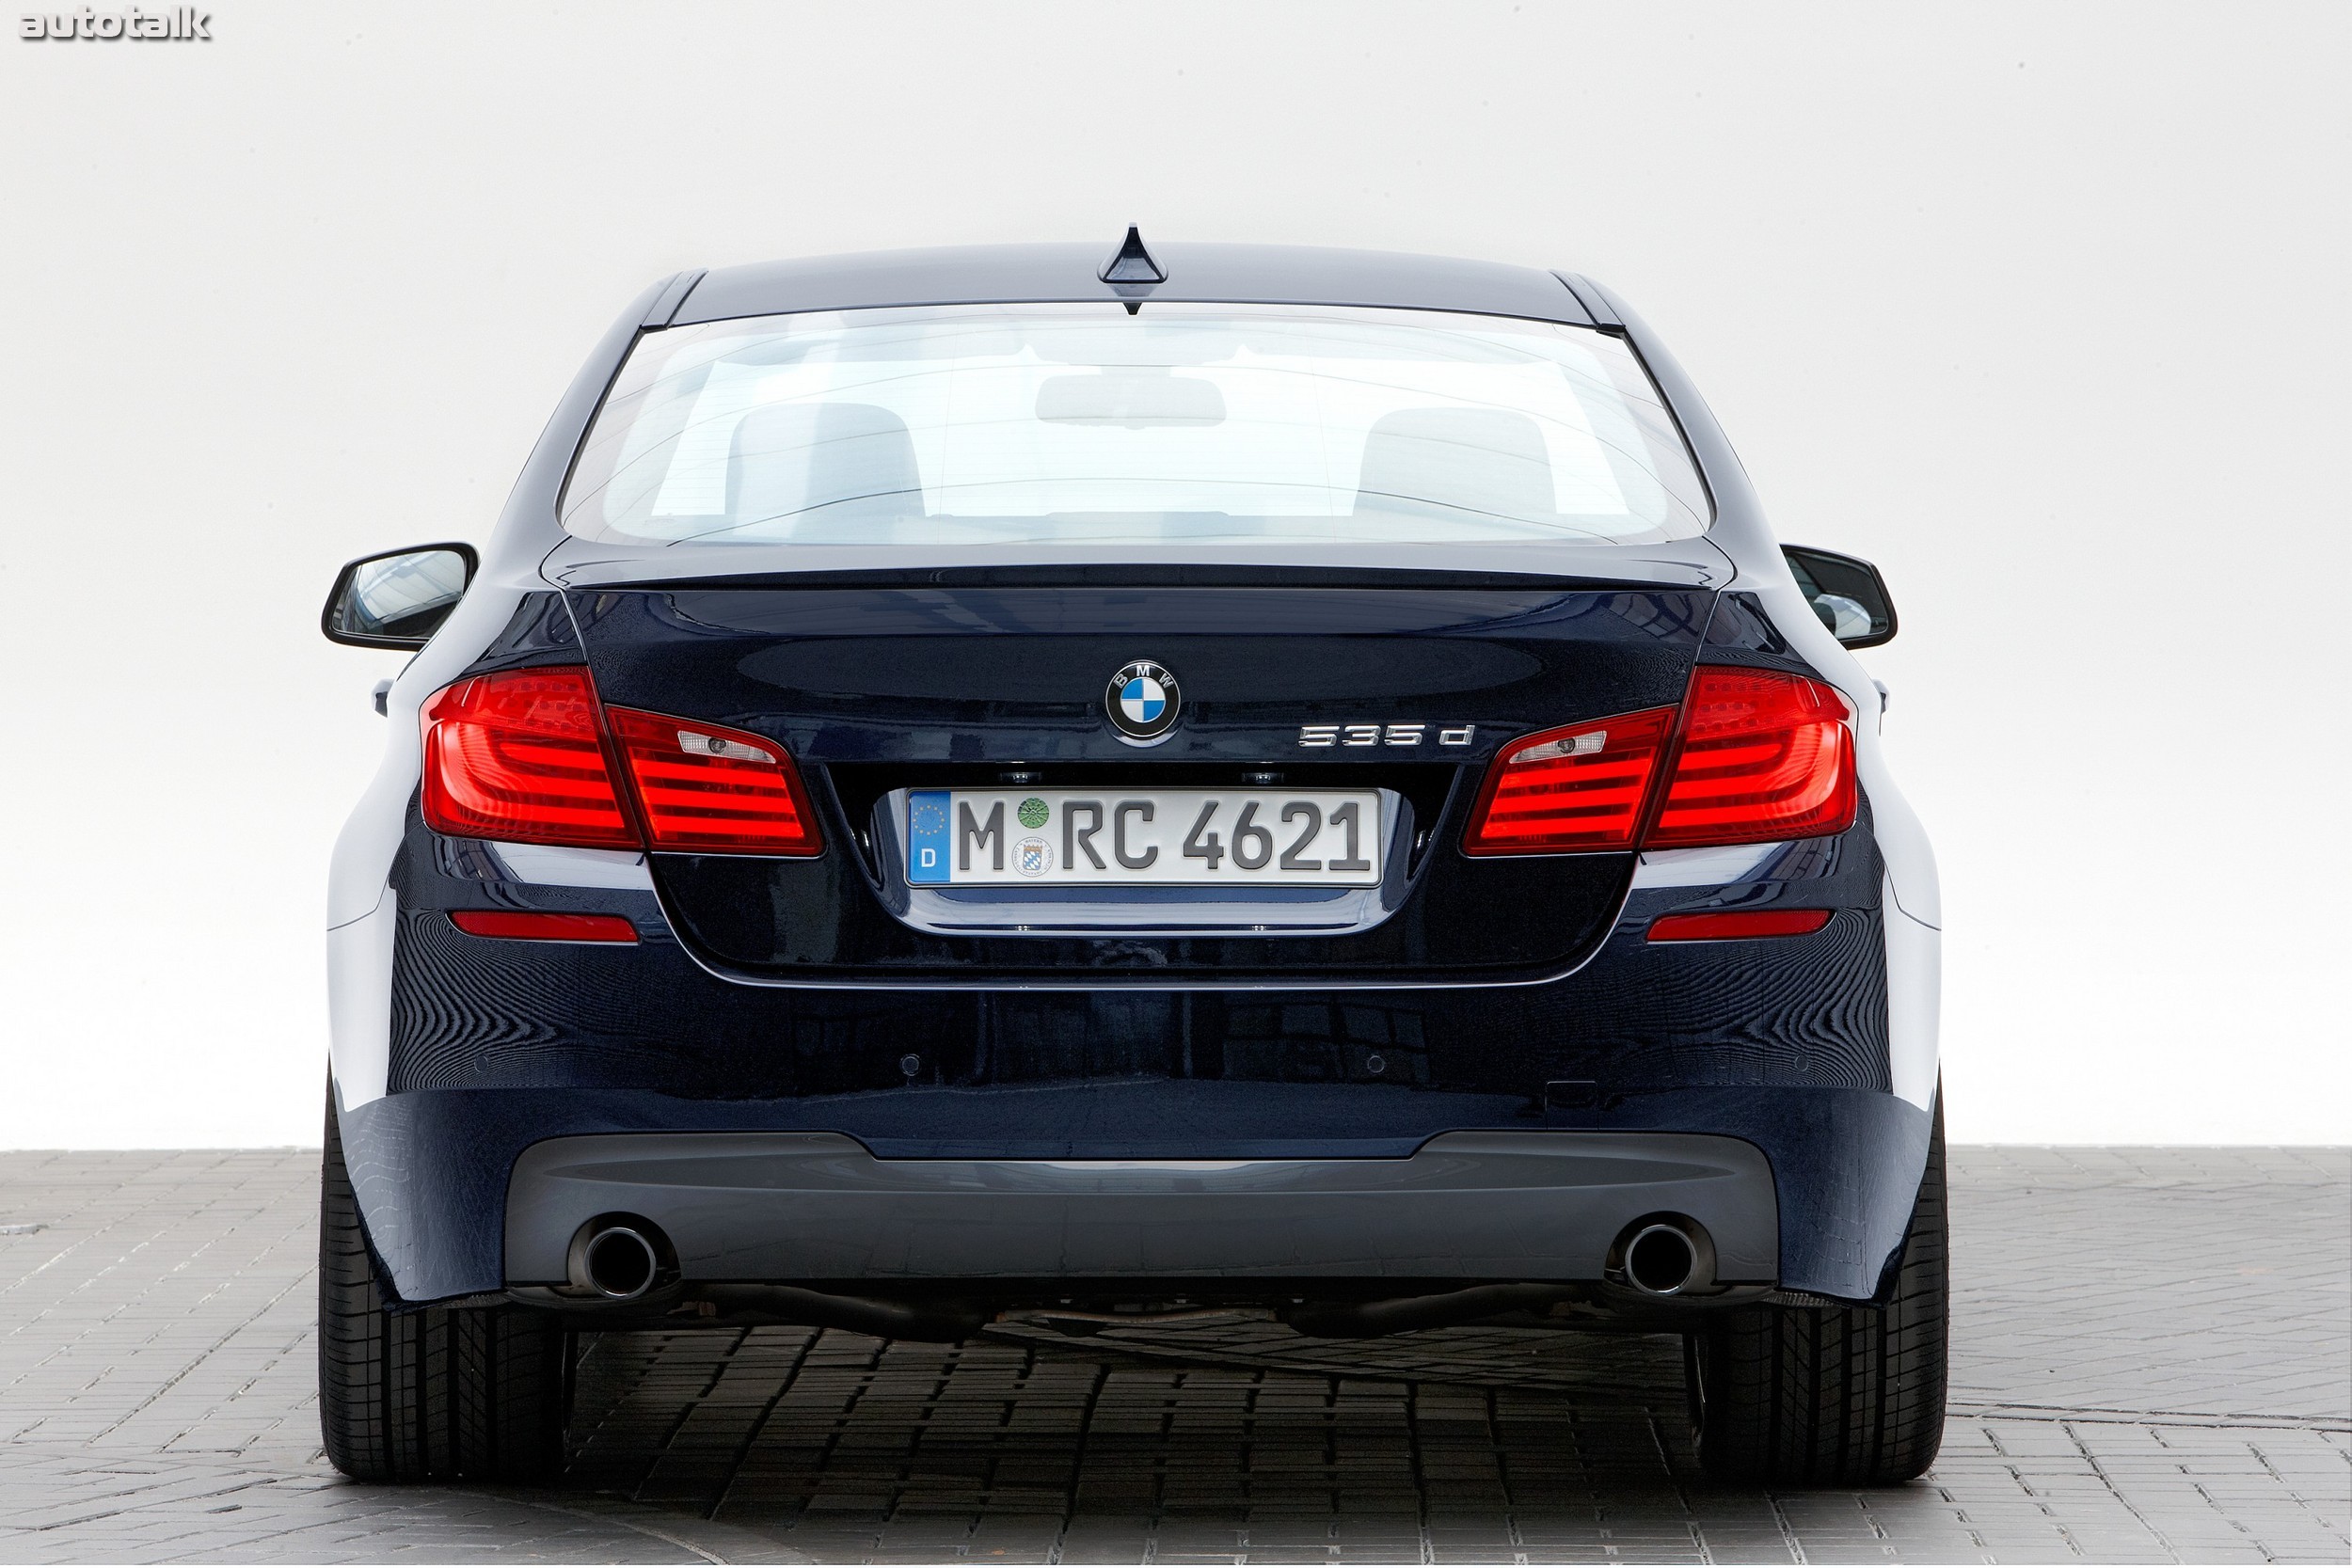 2011 BMW 5 Series